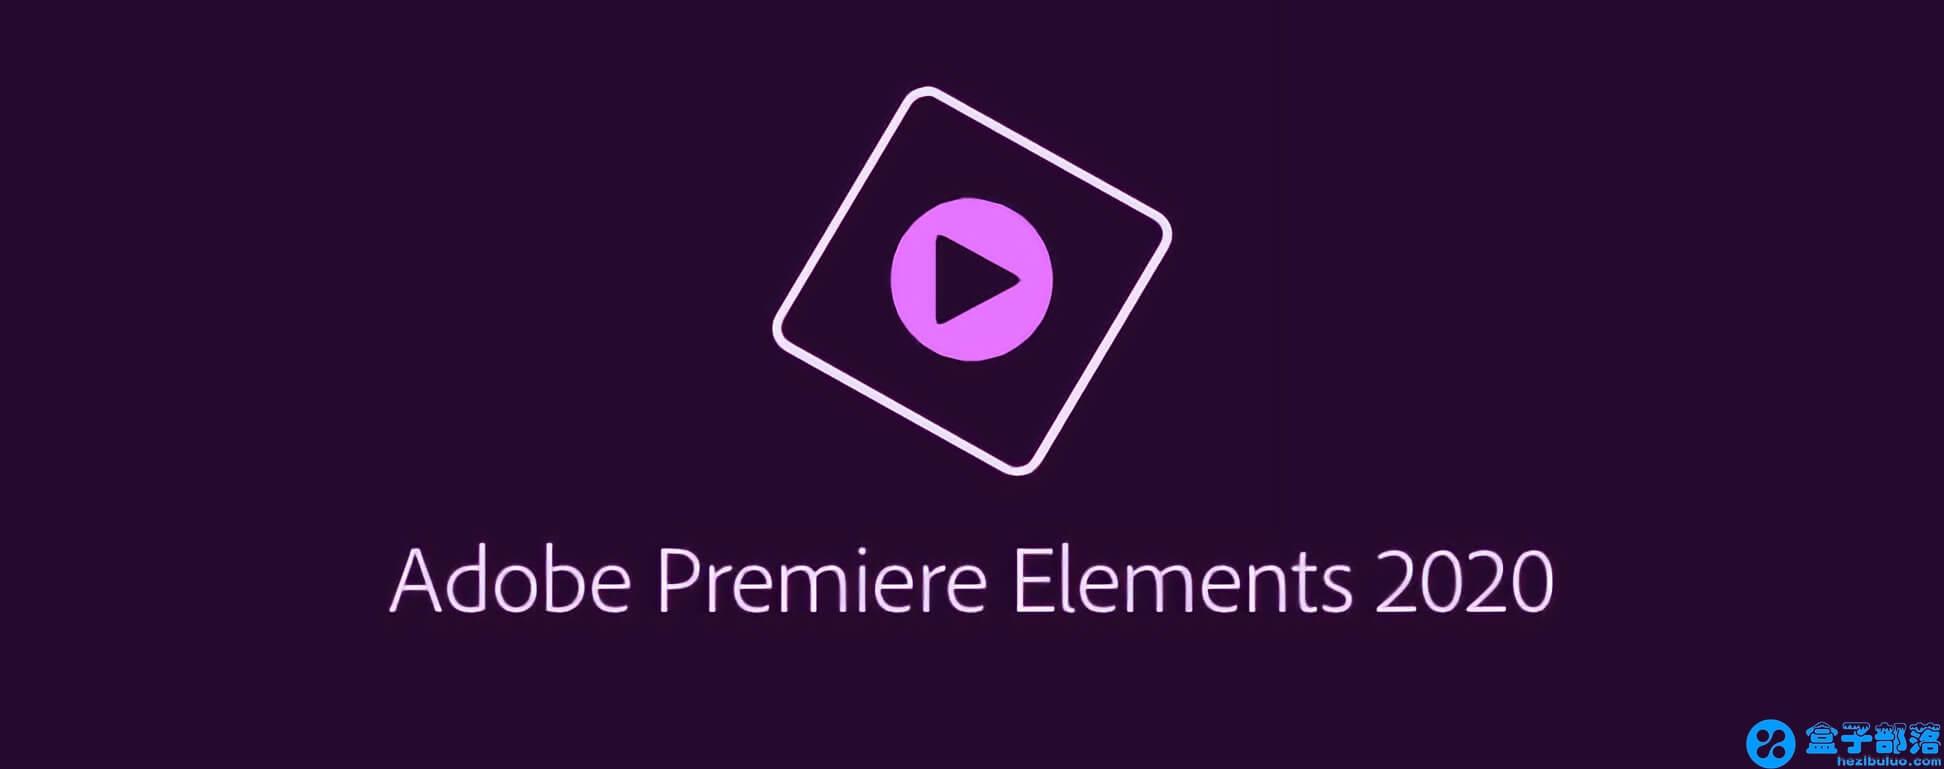 adobe photoshop elements & premiere elements 2020